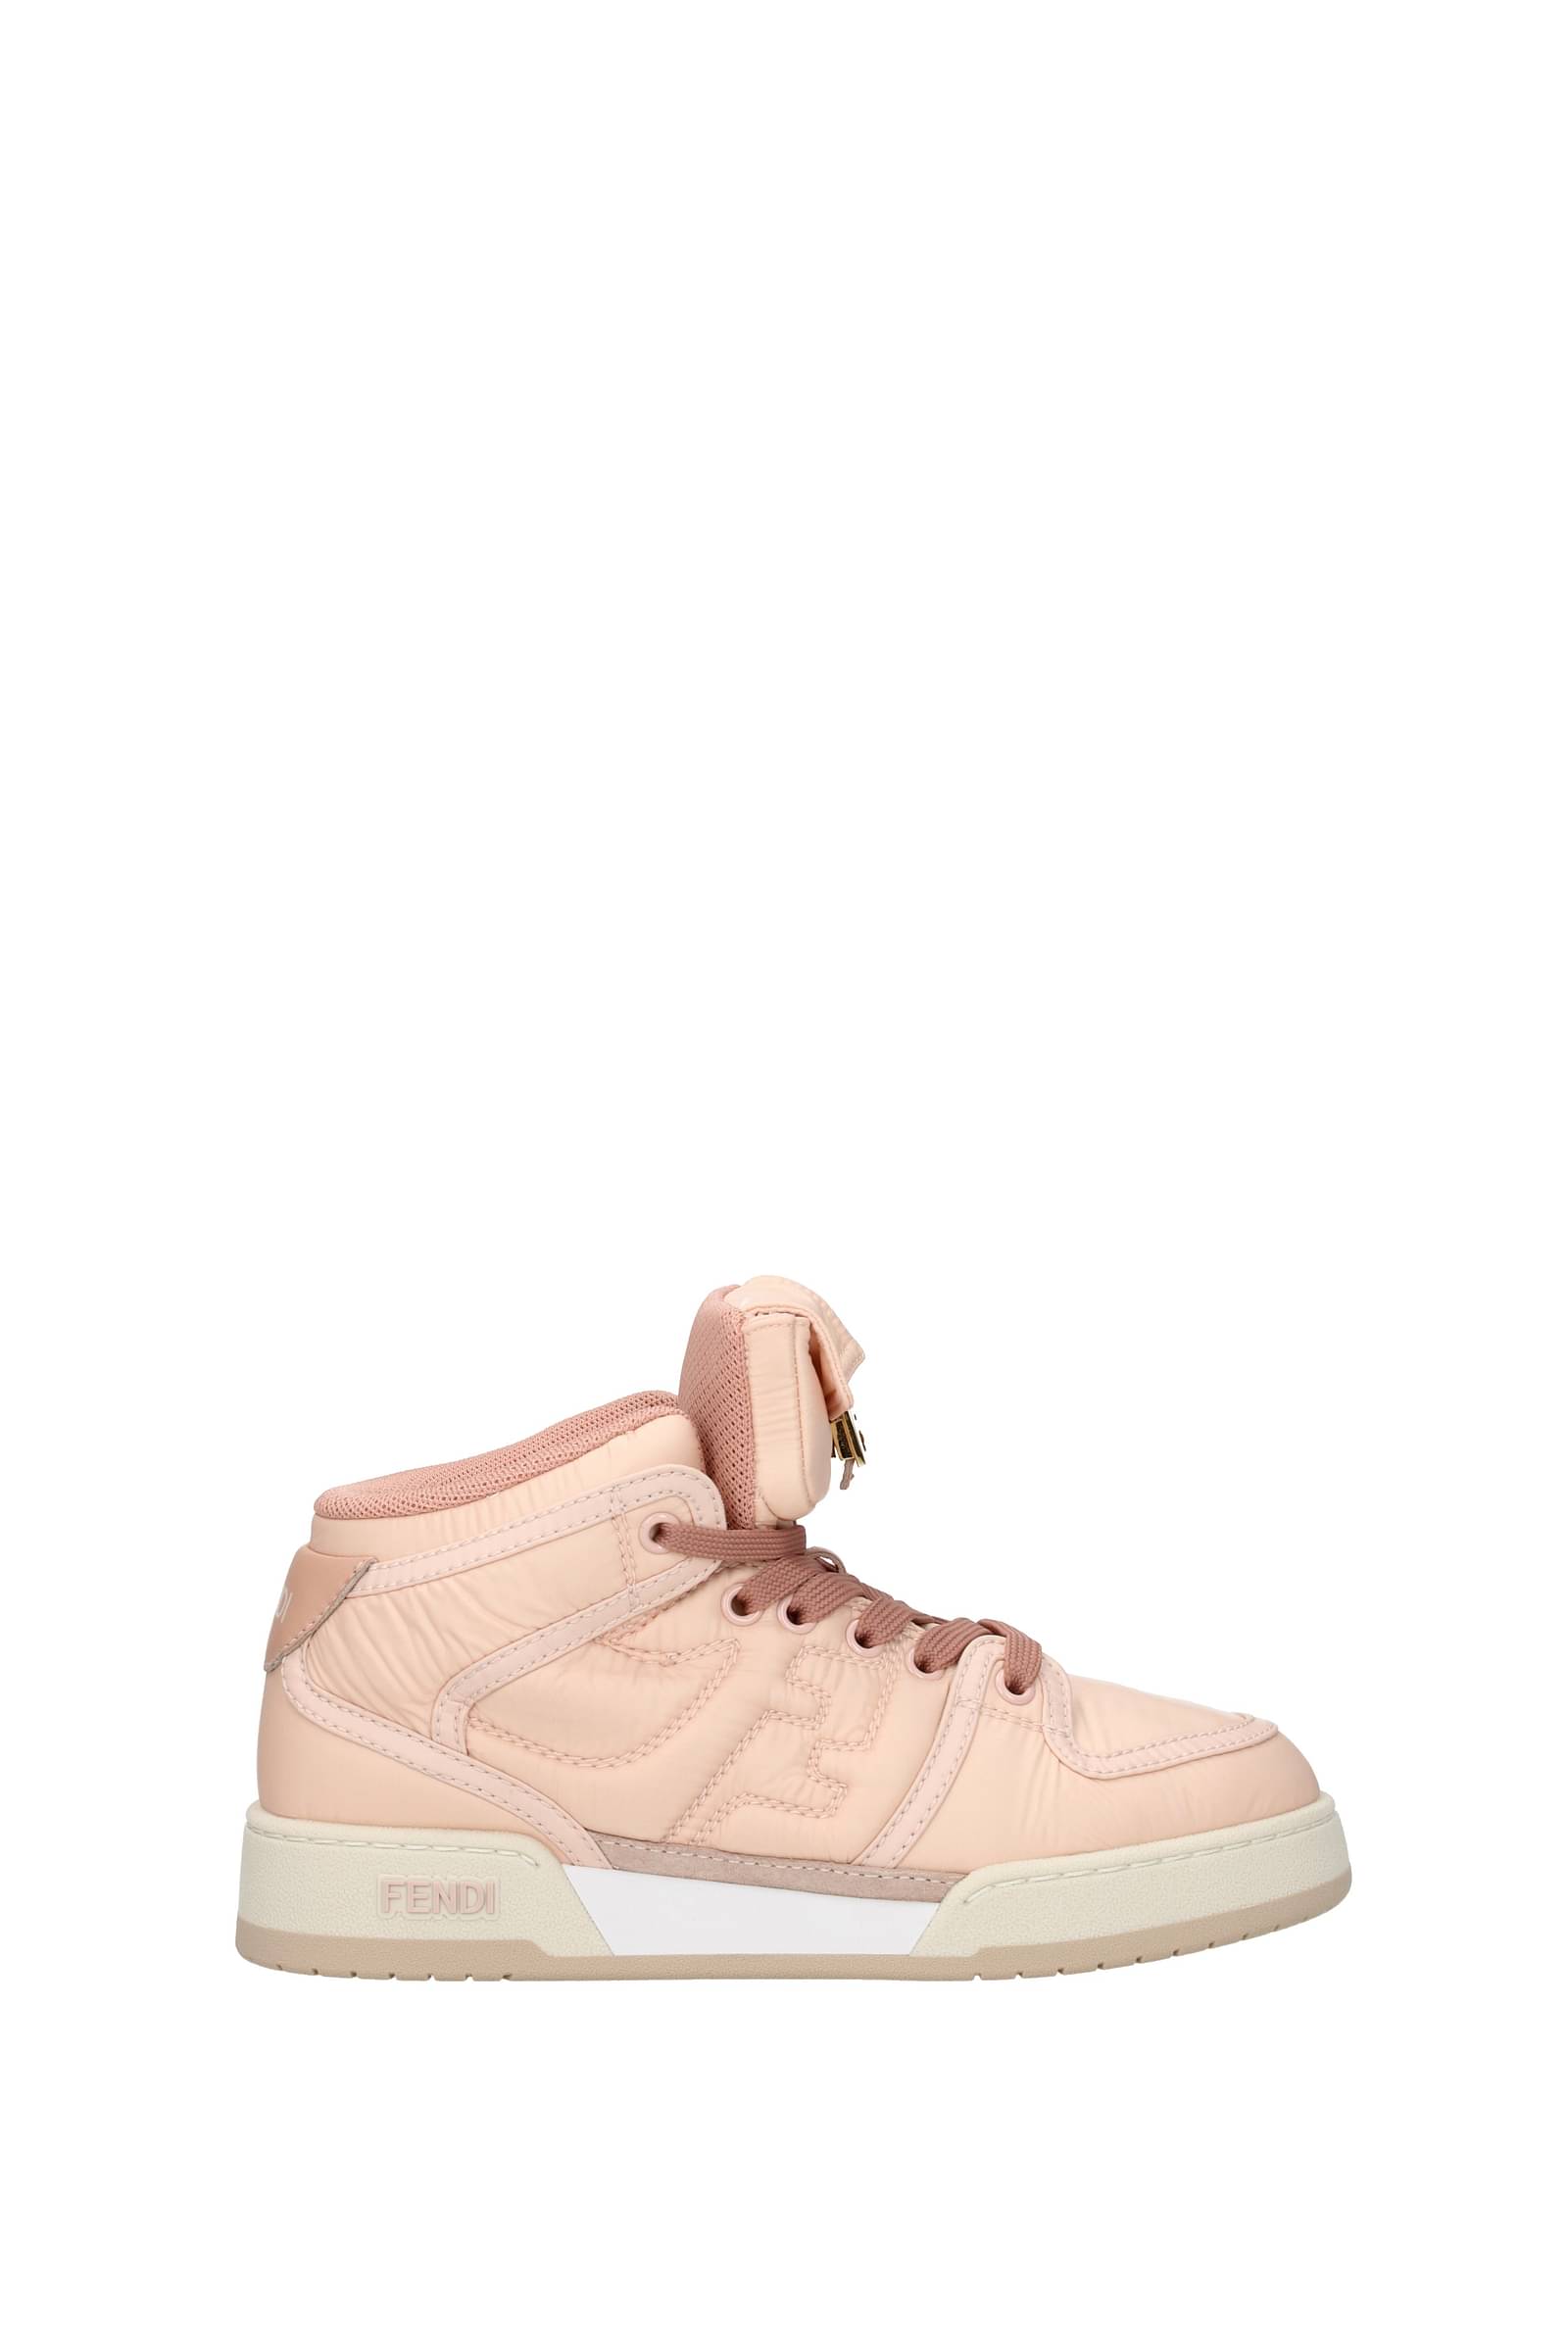 Fendi Sneakers Women 8E8380ALIRF1JG9 Nylon Pink Peach 598€